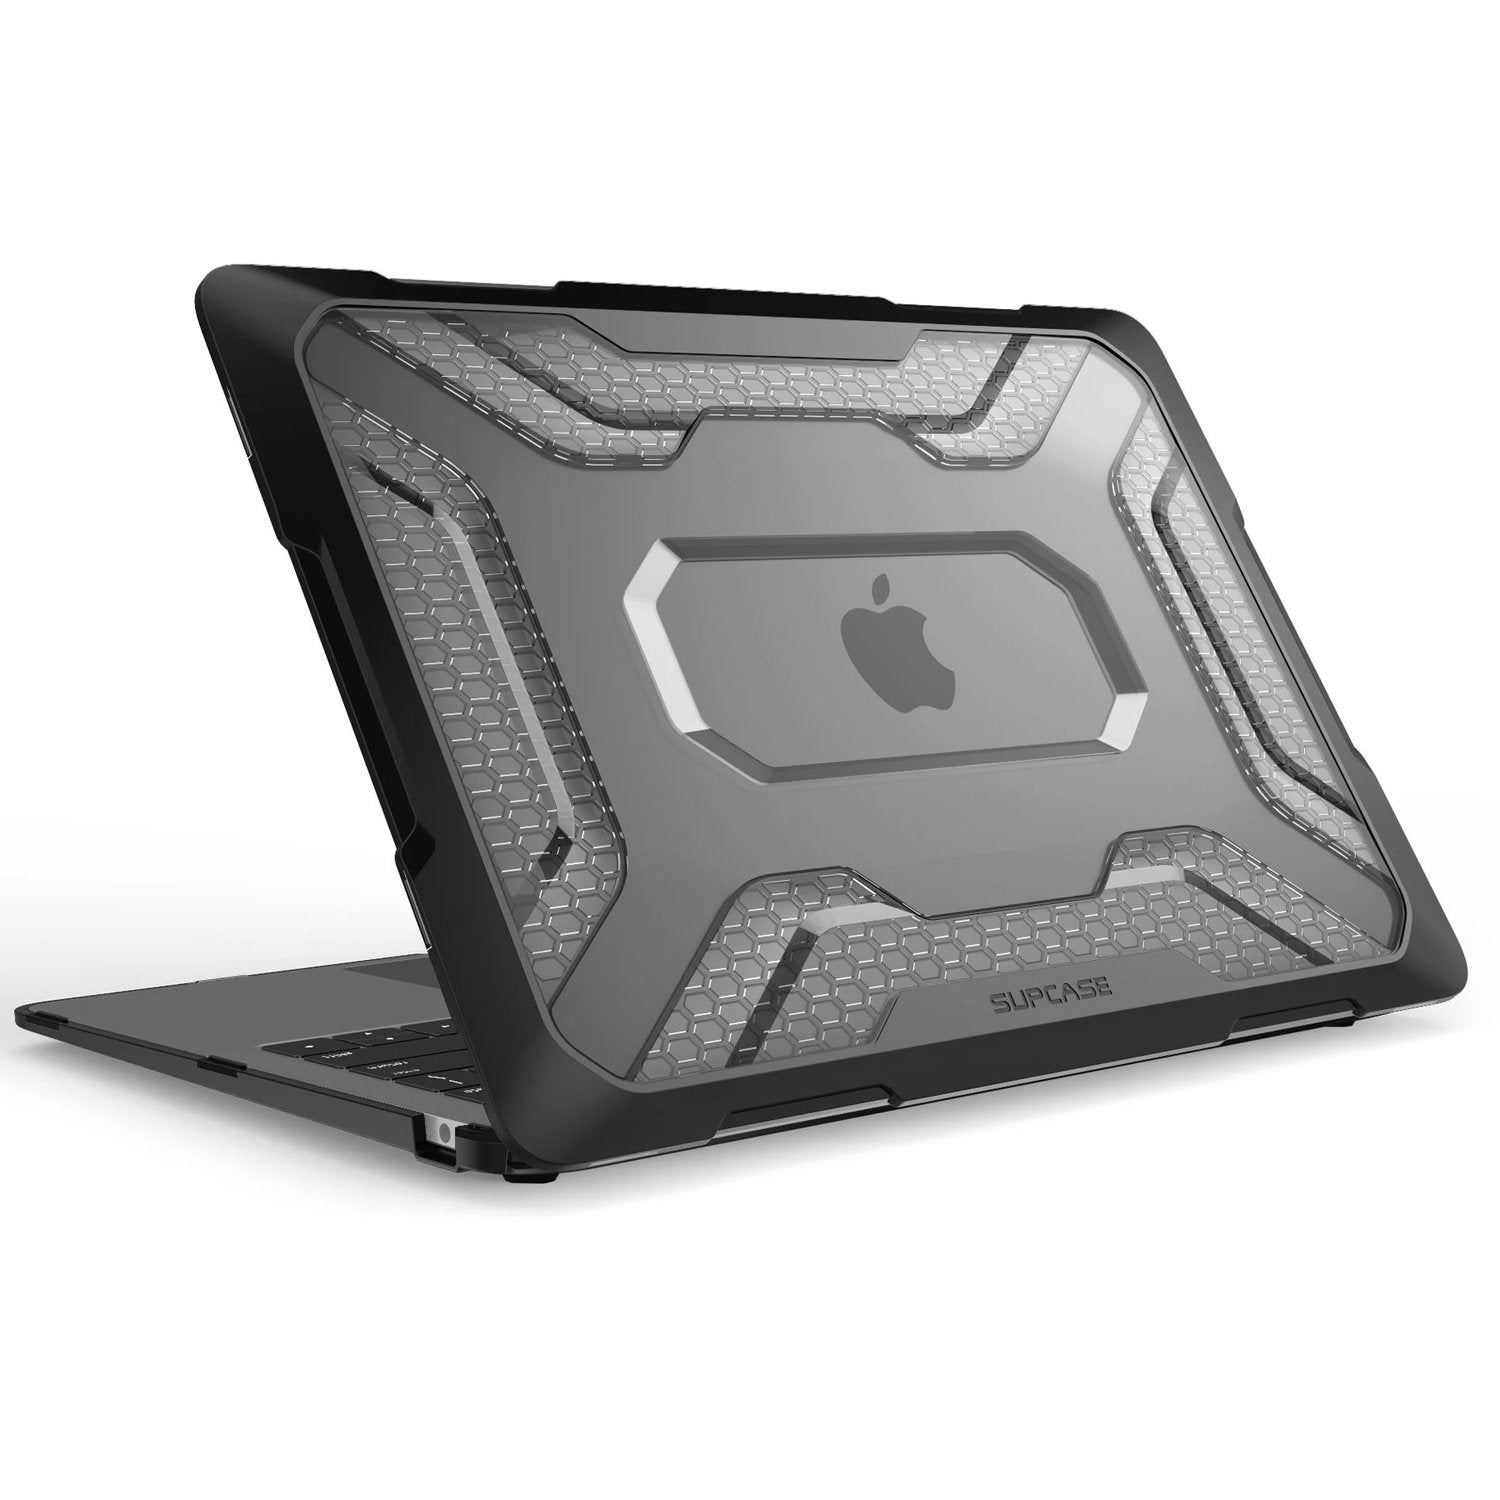 Supcase UB Series Hybrid Protective Case for Macbook Pro 13"(2020), Frost/Black Default Supcase 